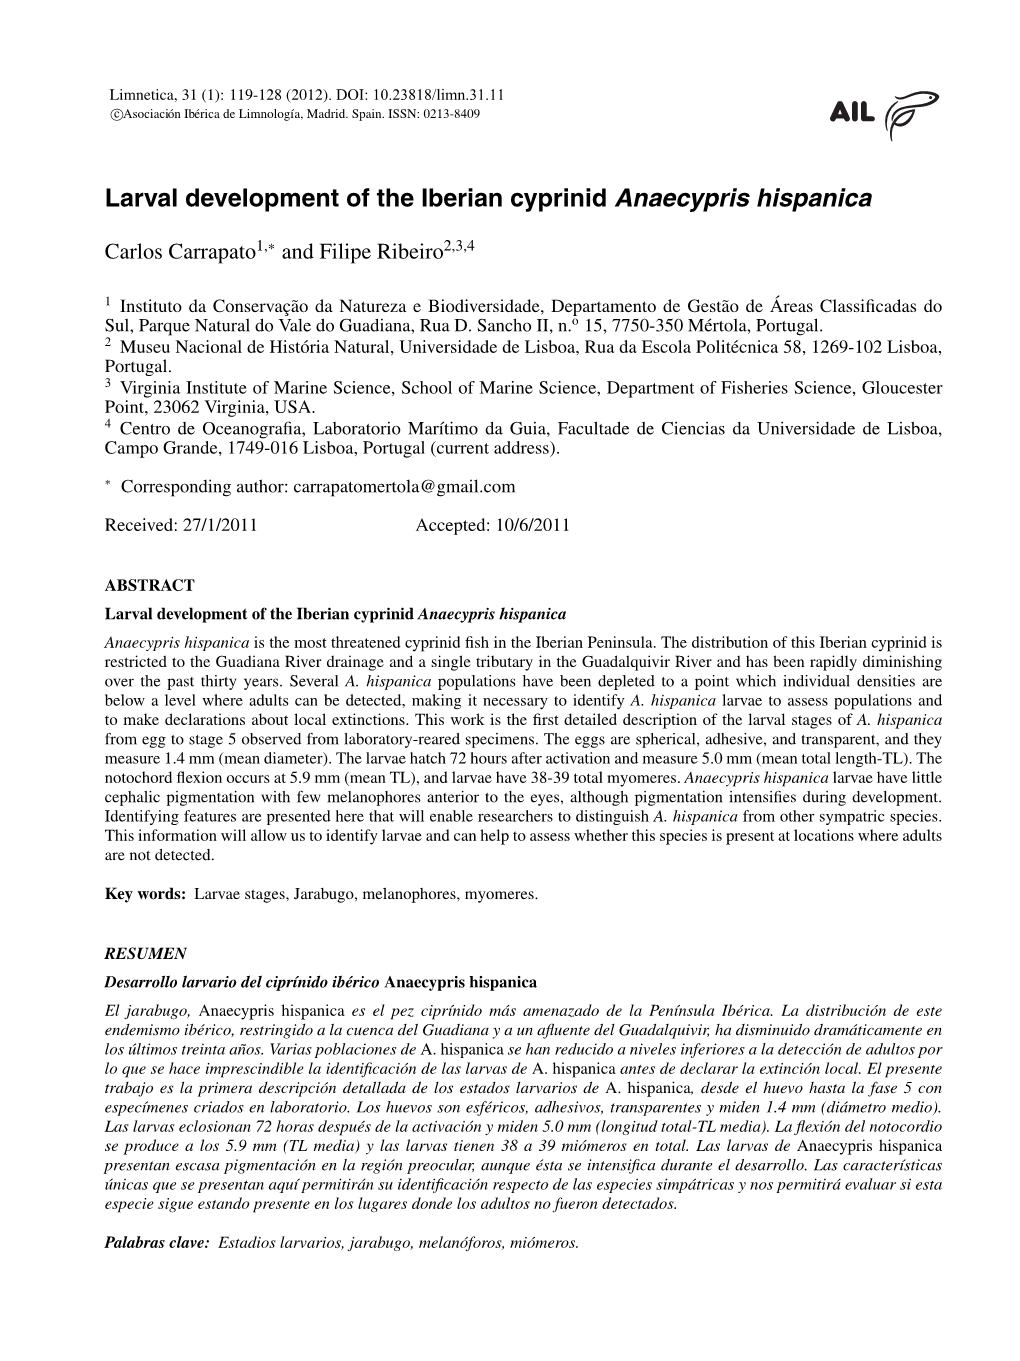 Larval Development of the Iberian Cyprinid Anaecypris Hispanica